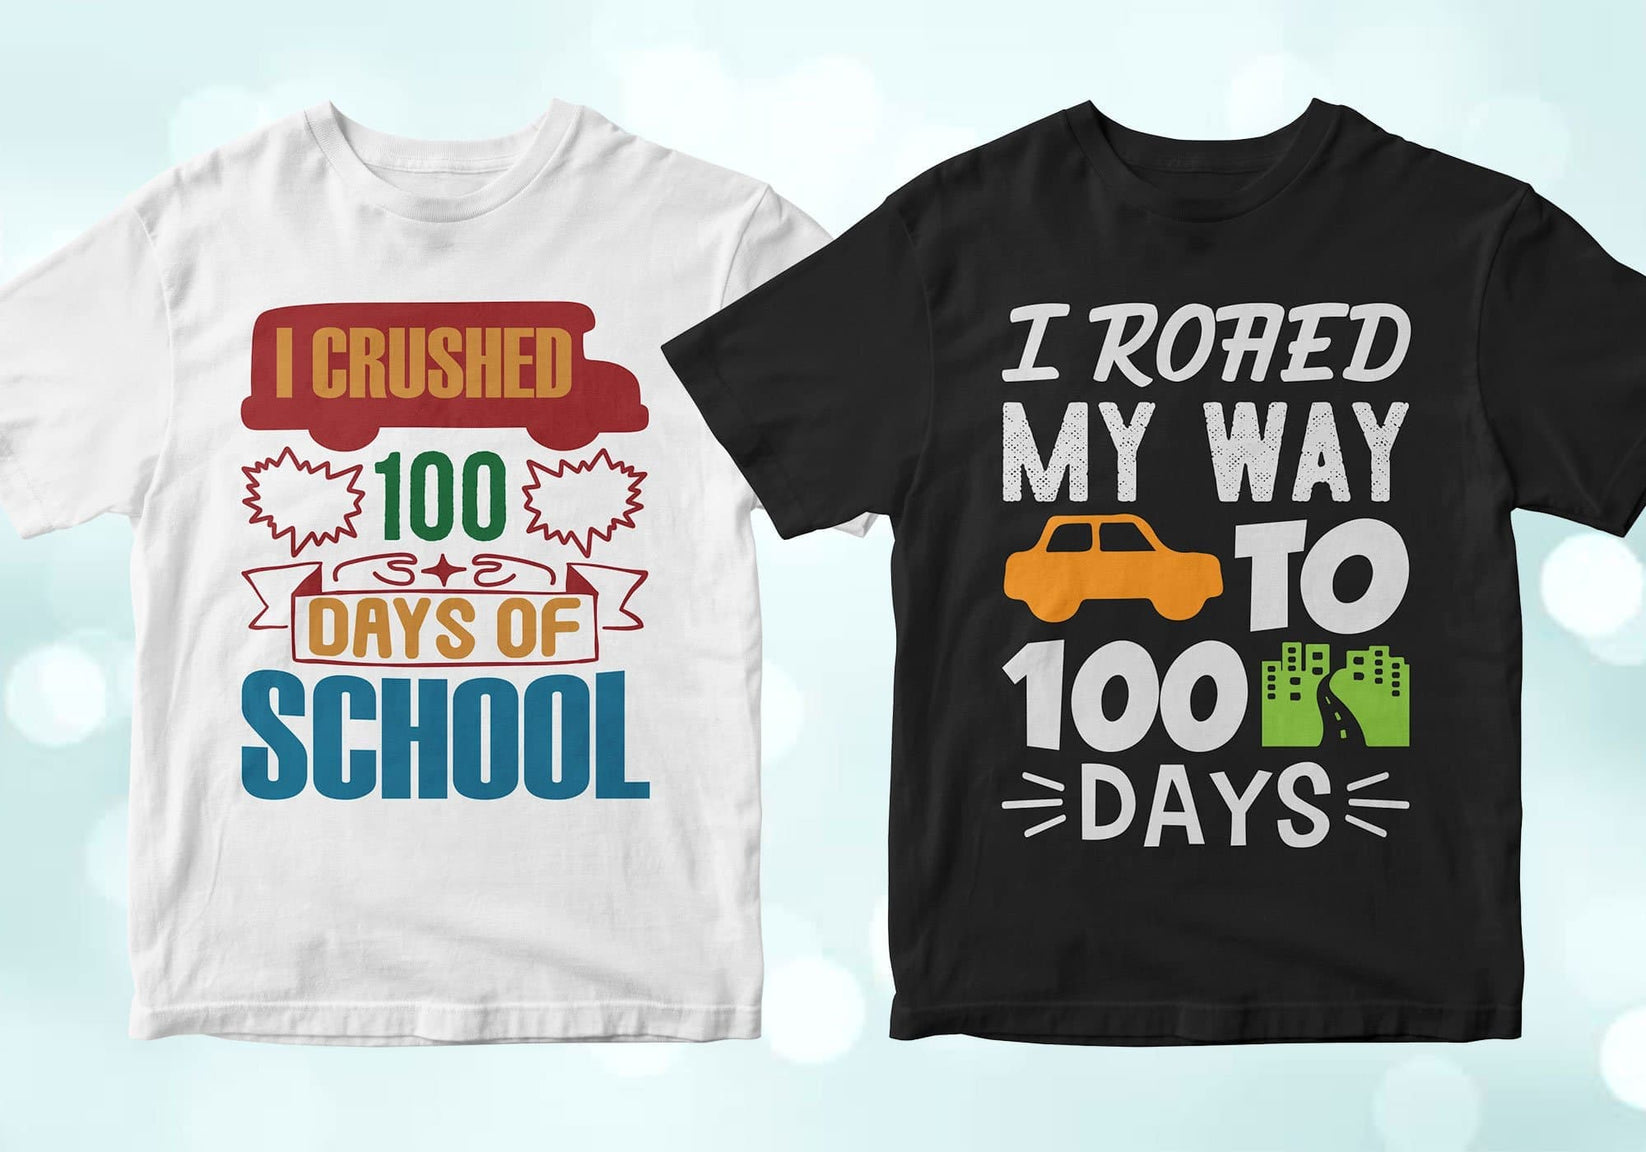 I crushed 100 days of school, I roared my way to 100 days